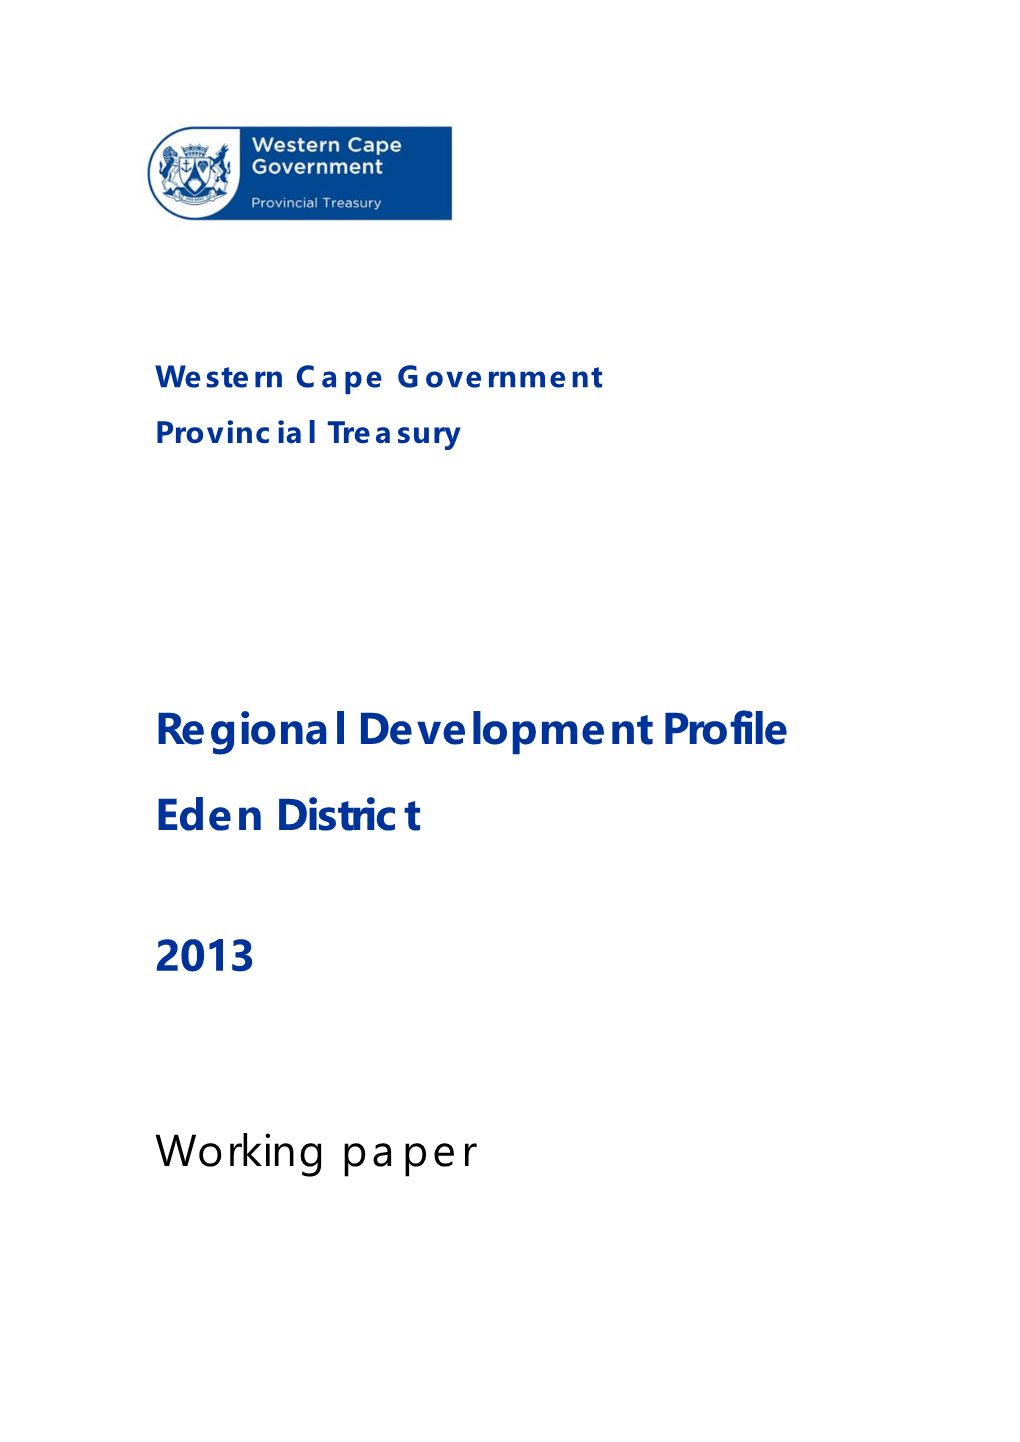 Regional Development Profile Eden District